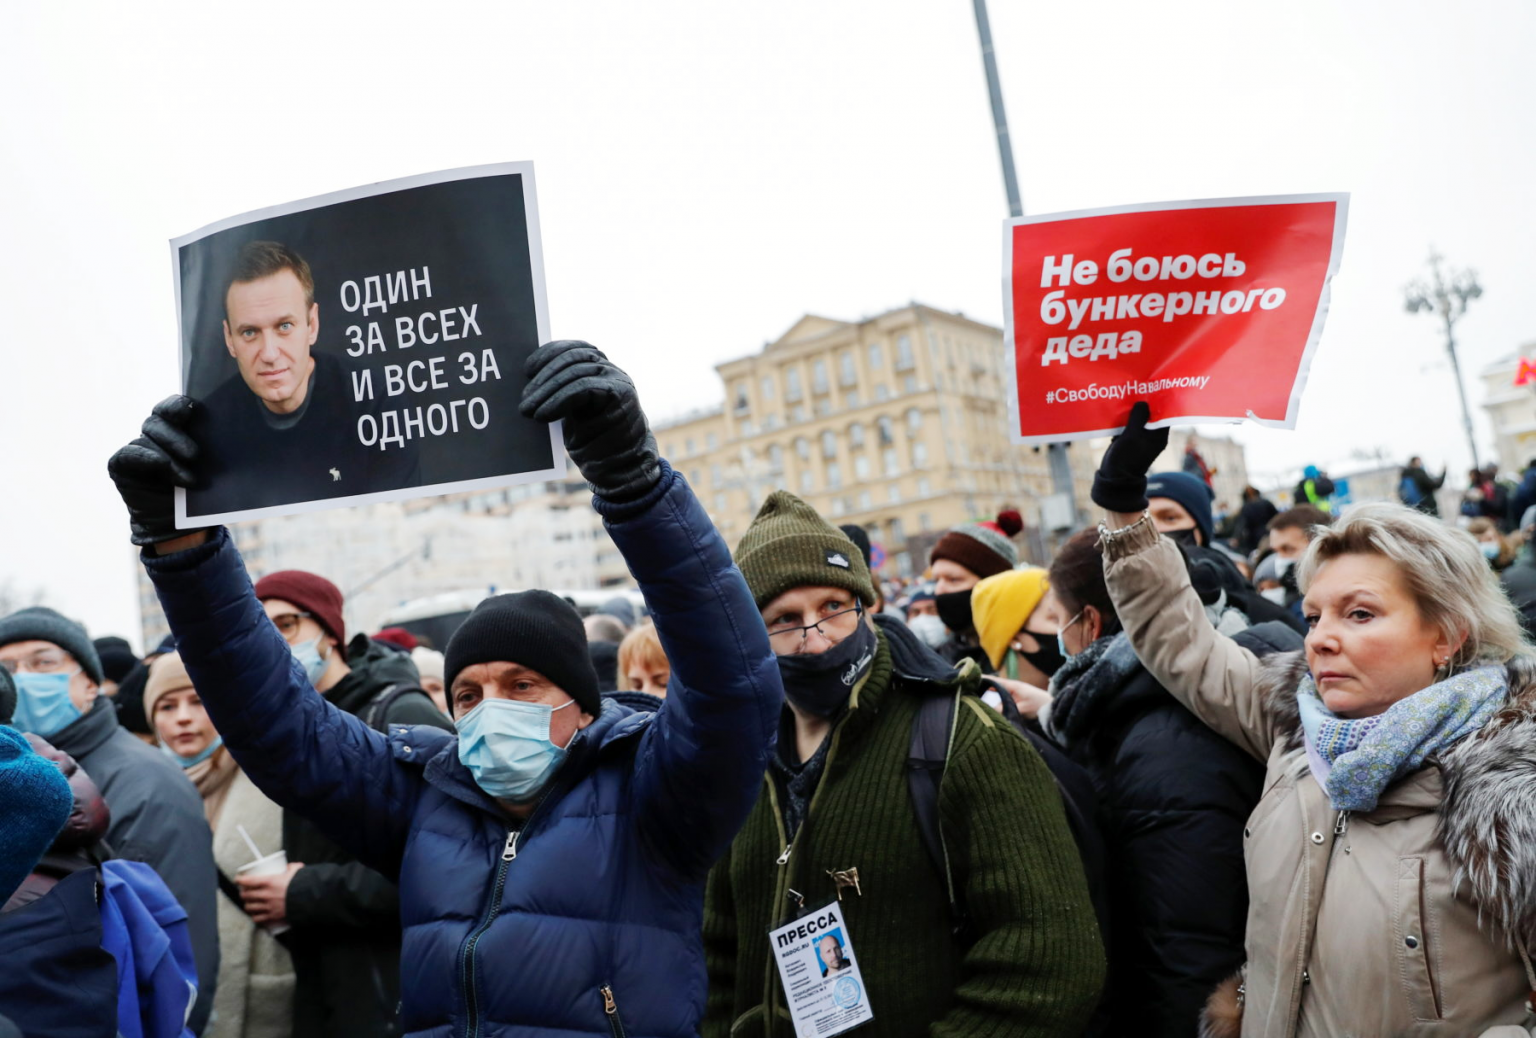 Митинг против навального